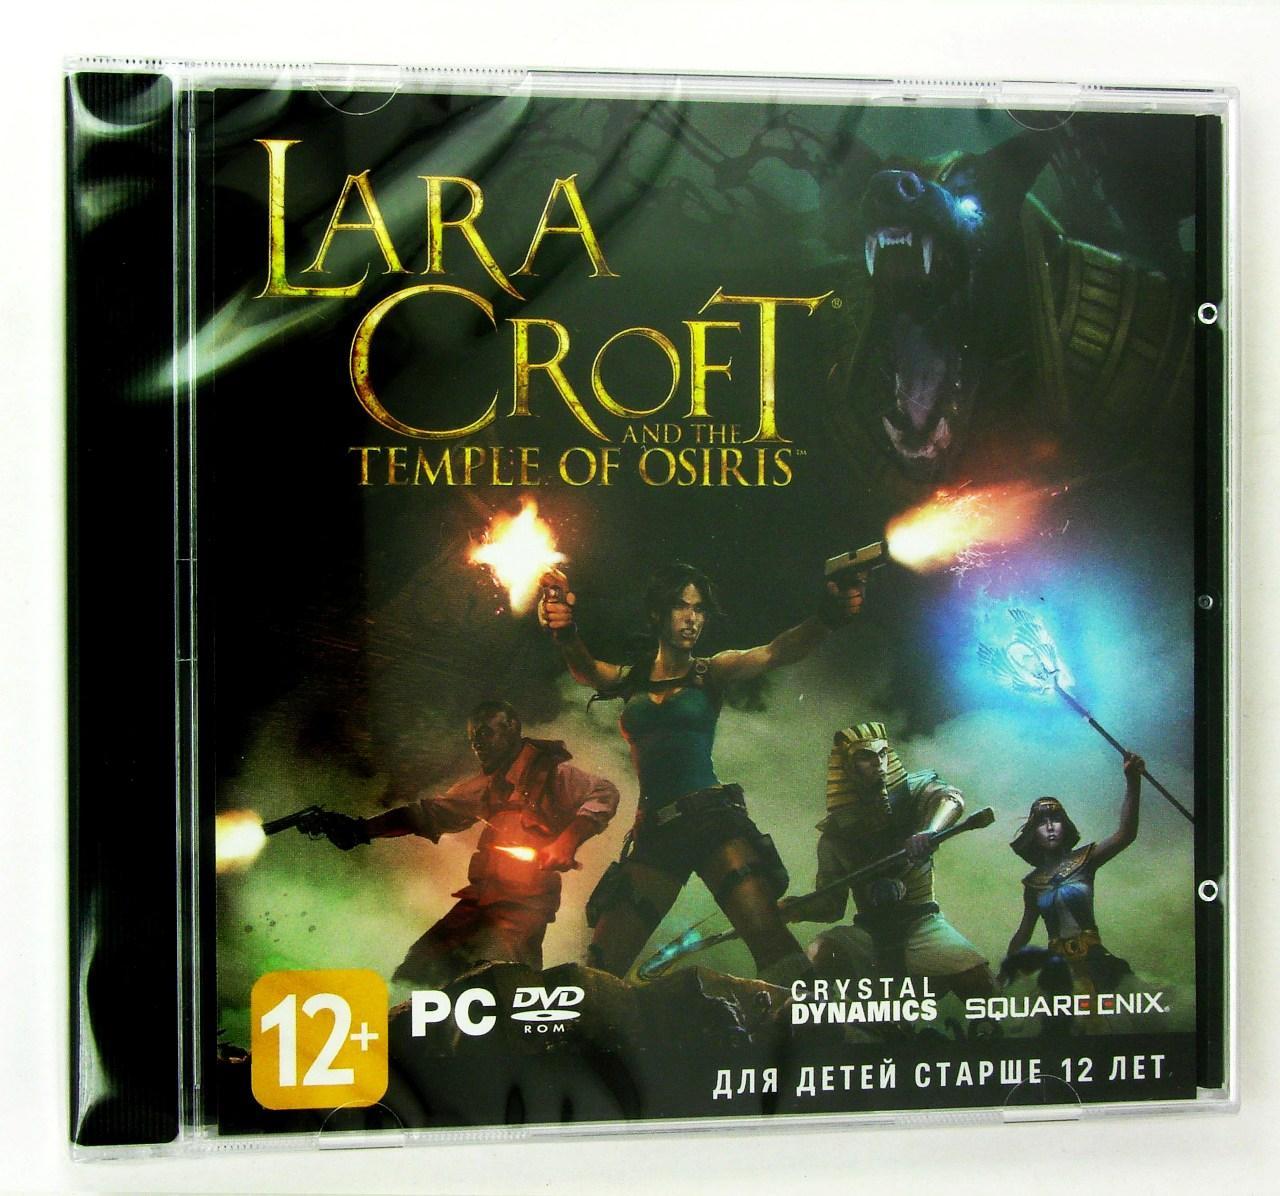  - Lara Croft and the Temple of Osiris (PC),  "", DVD